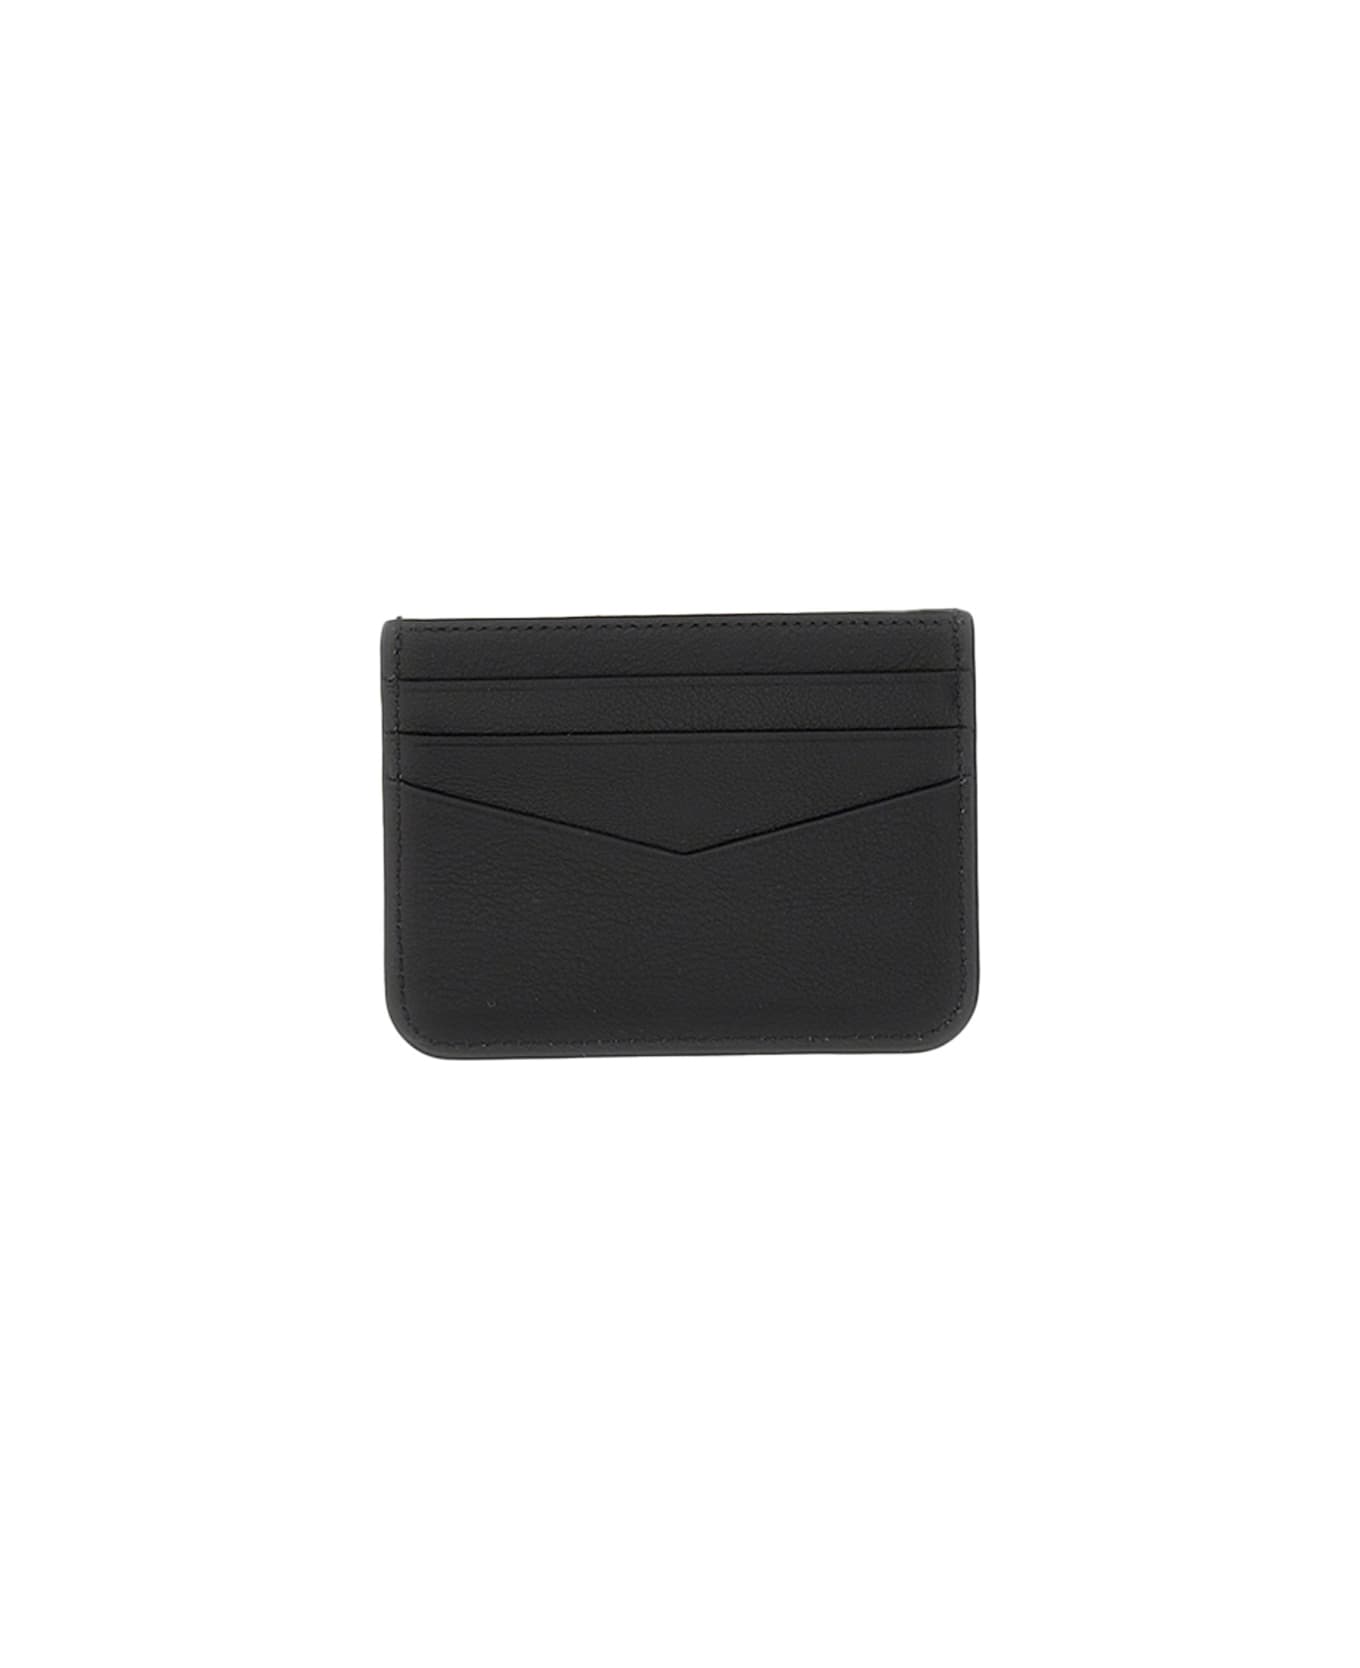 Kenzo Card Holder With Logo - BLACK